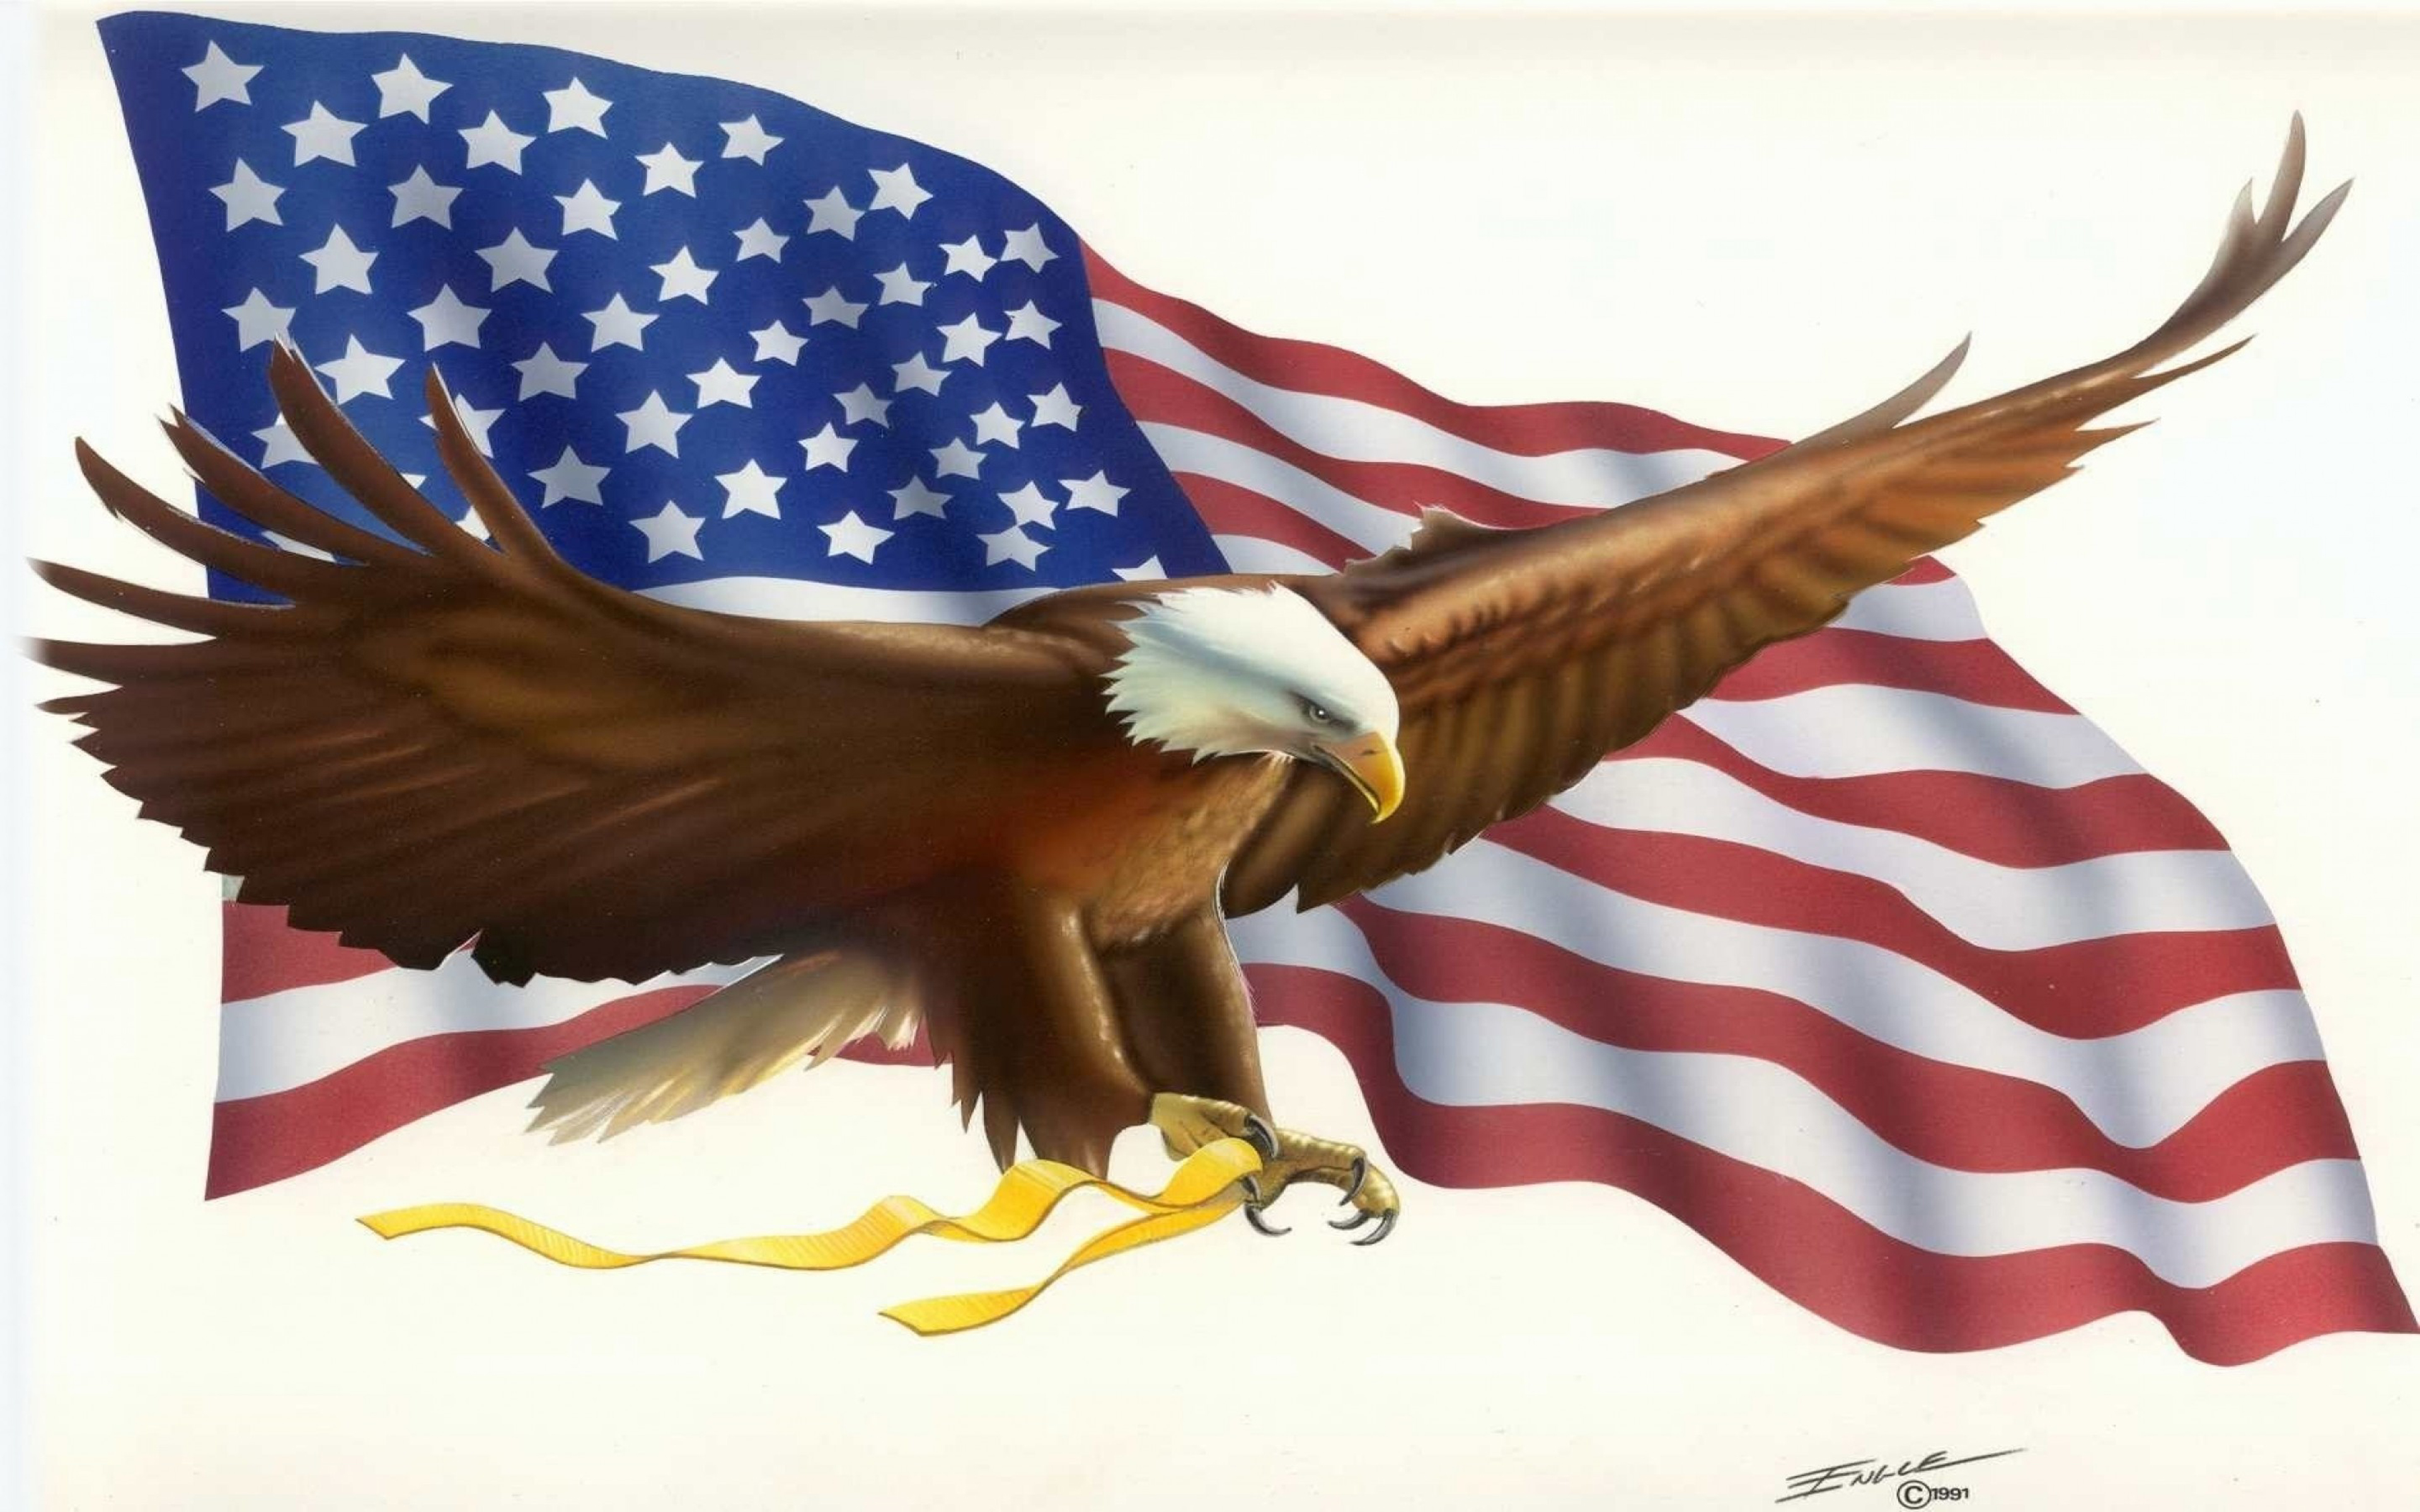 American Flag Bald Eagle Symbols Desktop Wallpaper Hd For Mobile Phones